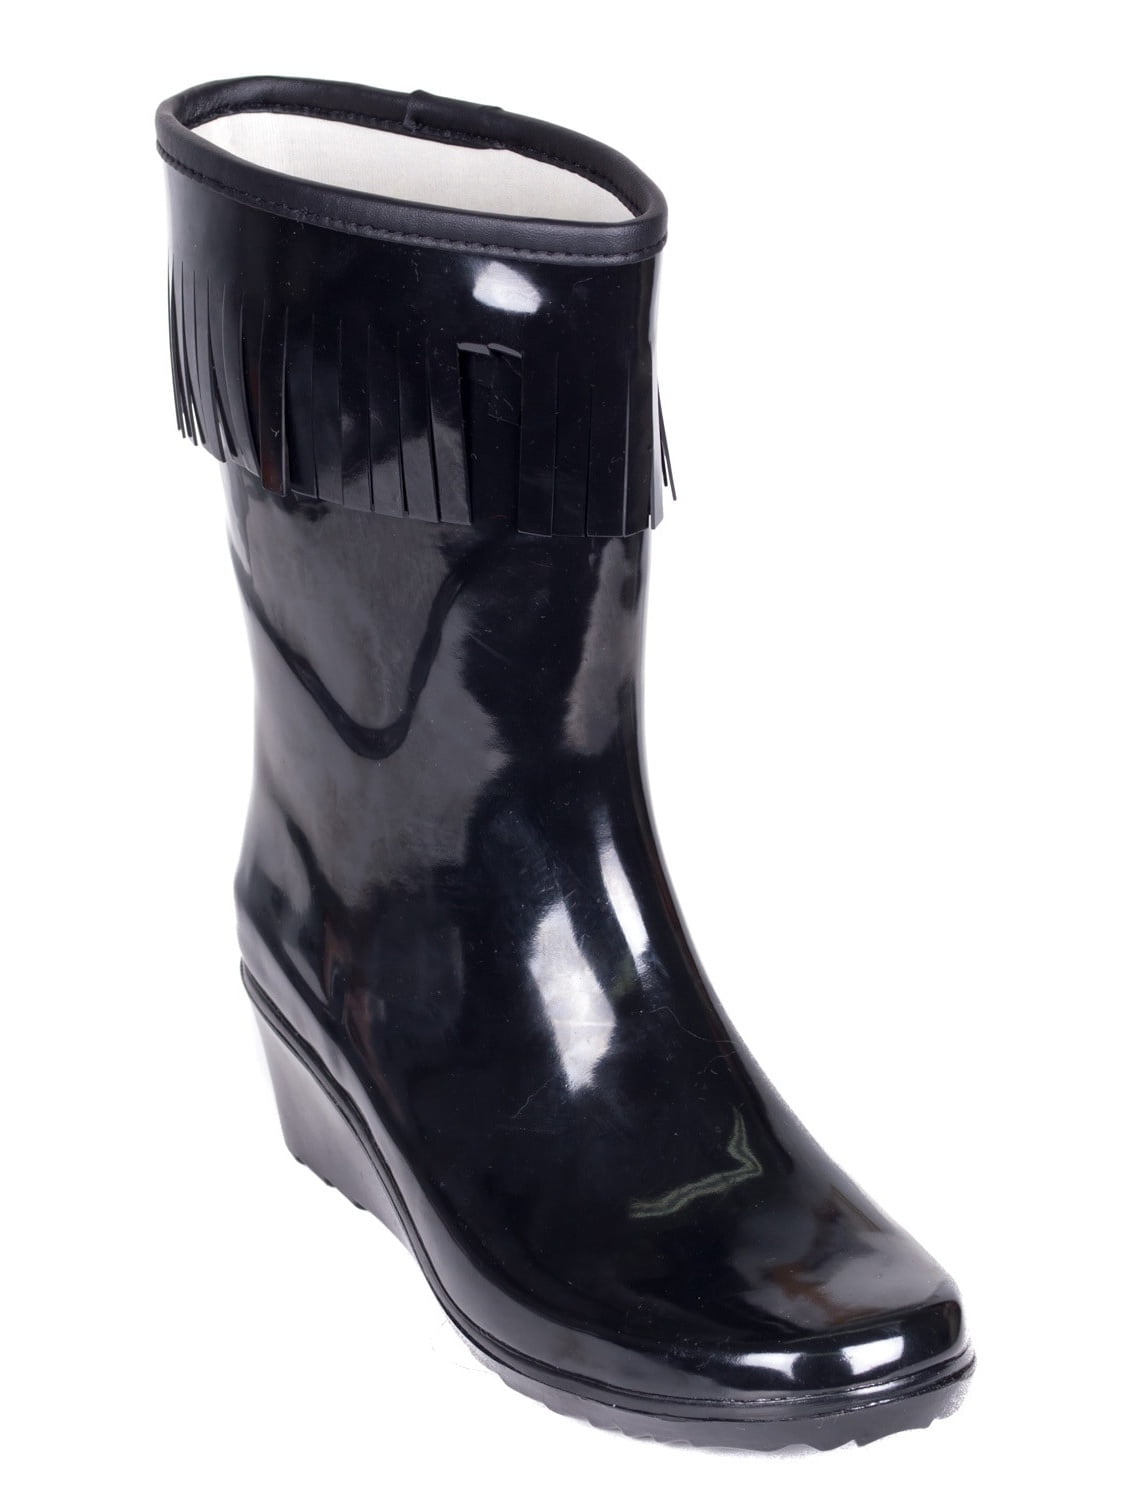 walmart black rain boots